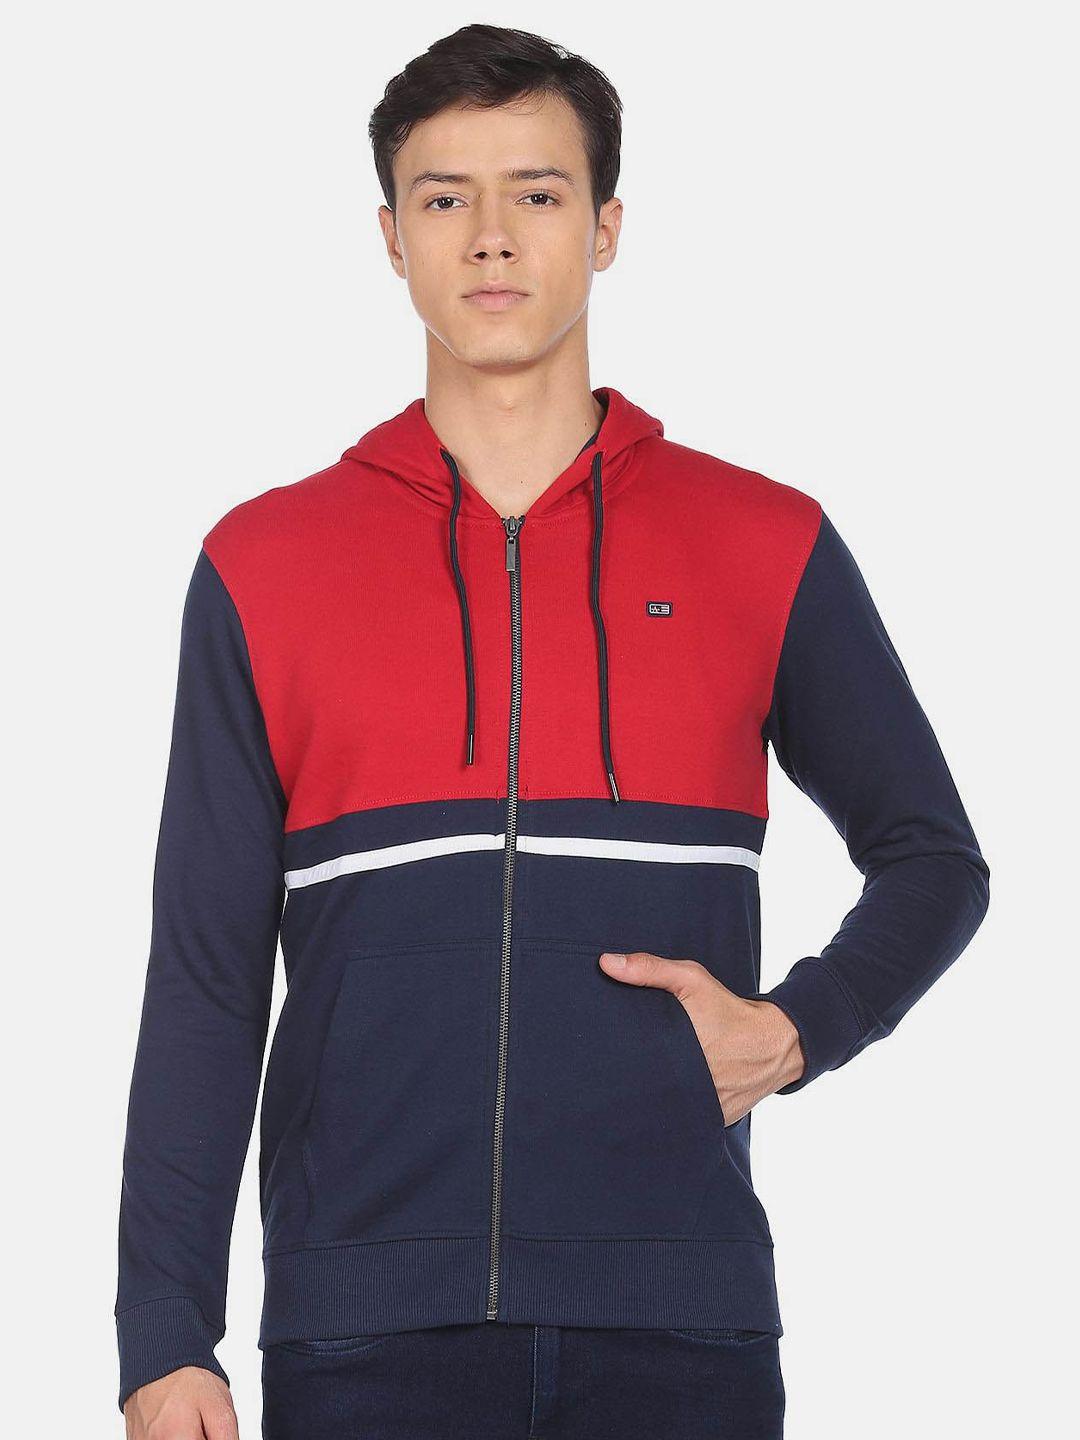 arrow-sport-colourblocked-hooded-sweatshirt